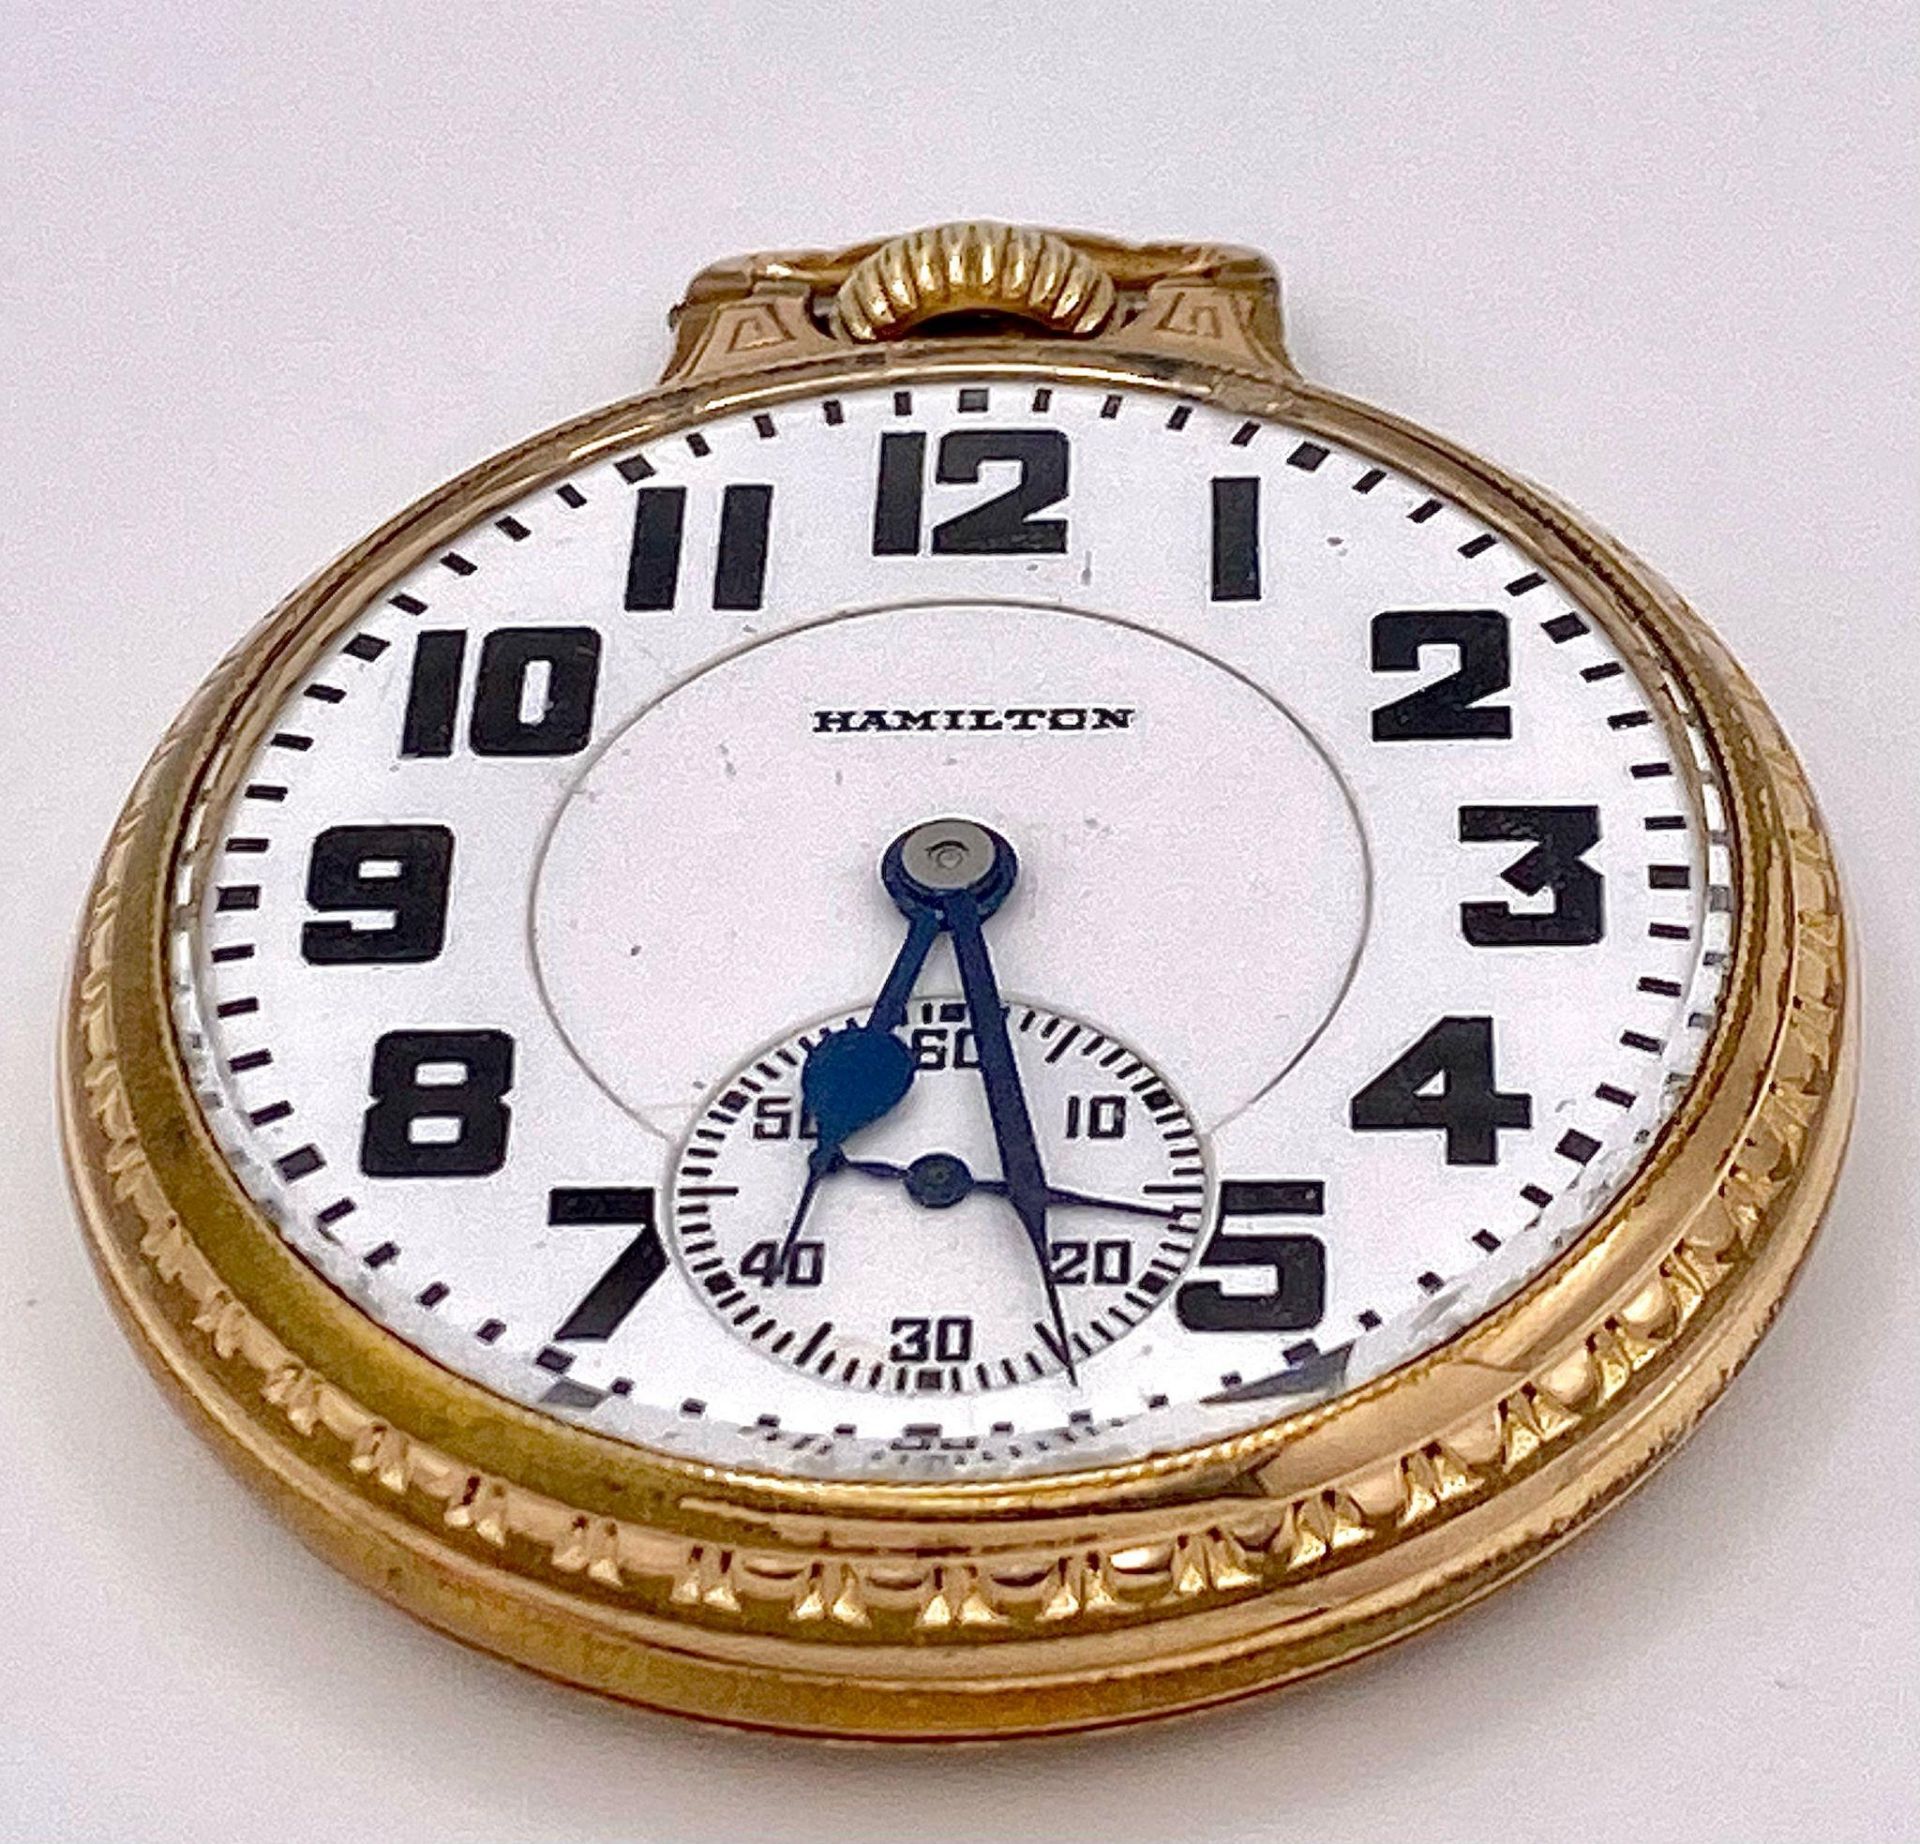 A 1930 Hamilton Railroad Model 2 10K Gold Filled Pocket Watch. 21 jewel. 2559692 movement. Top - Image 2 of 4